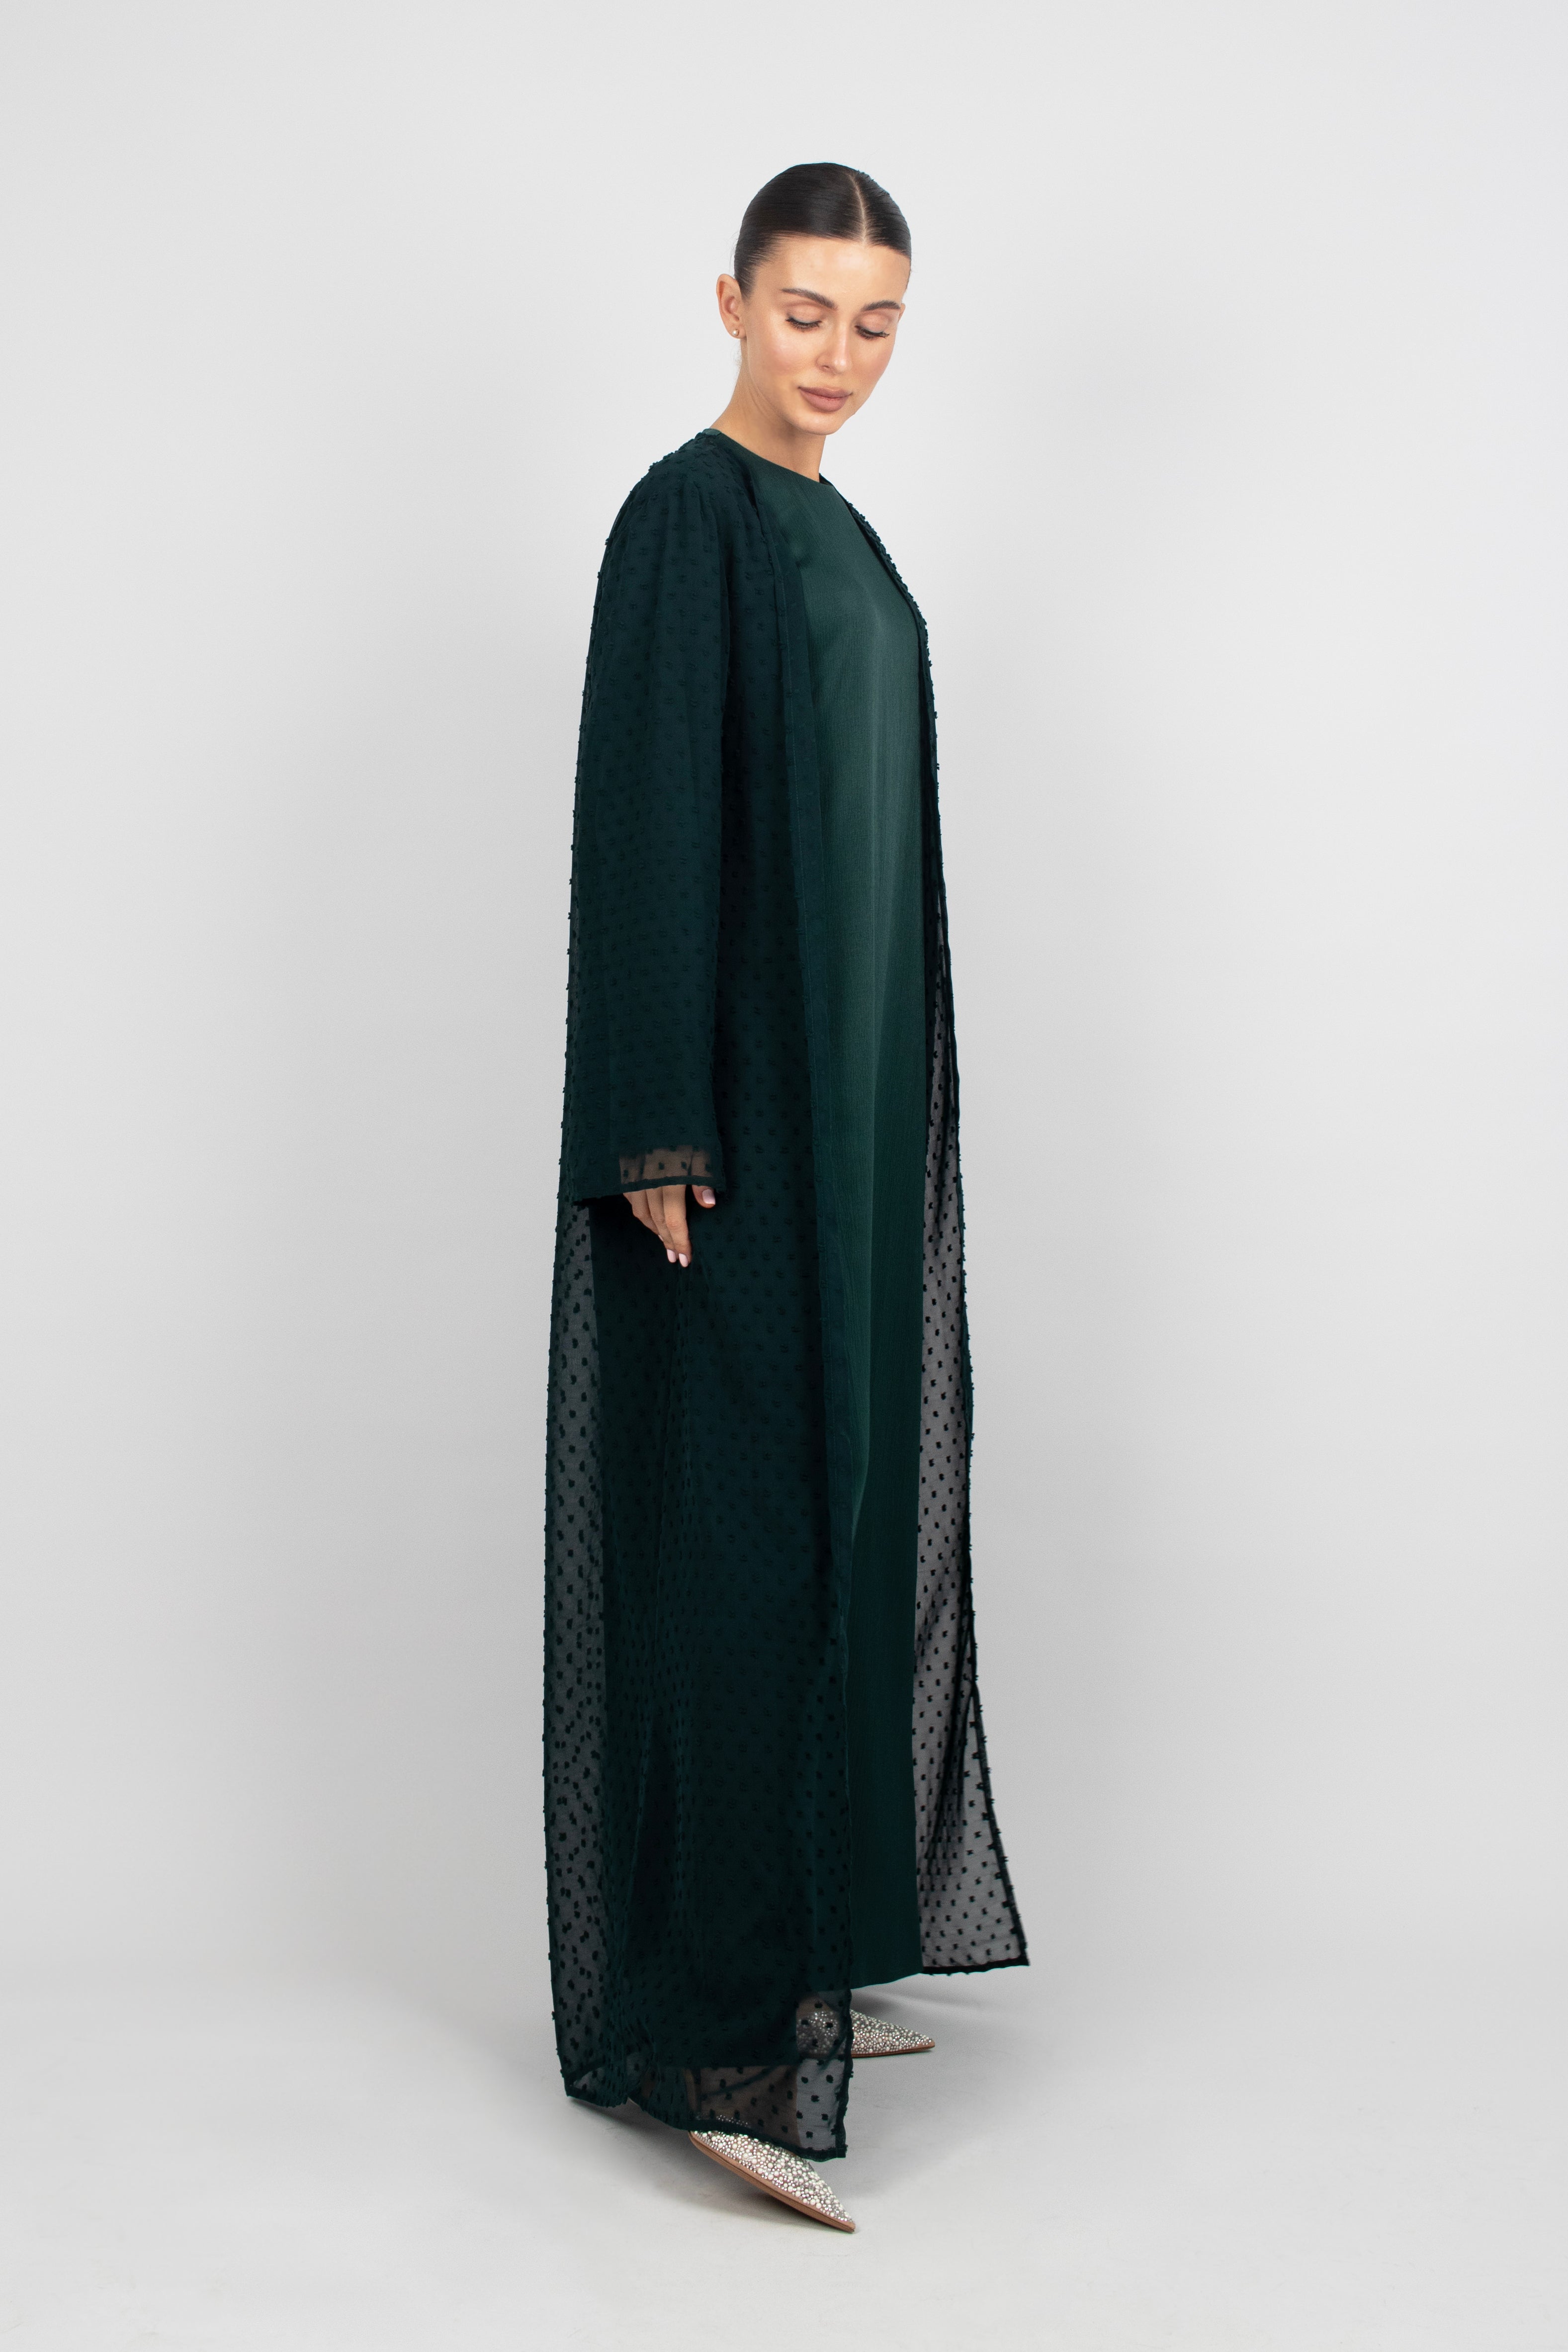 AE - Sheer Abaya and Dress Set - Emerald